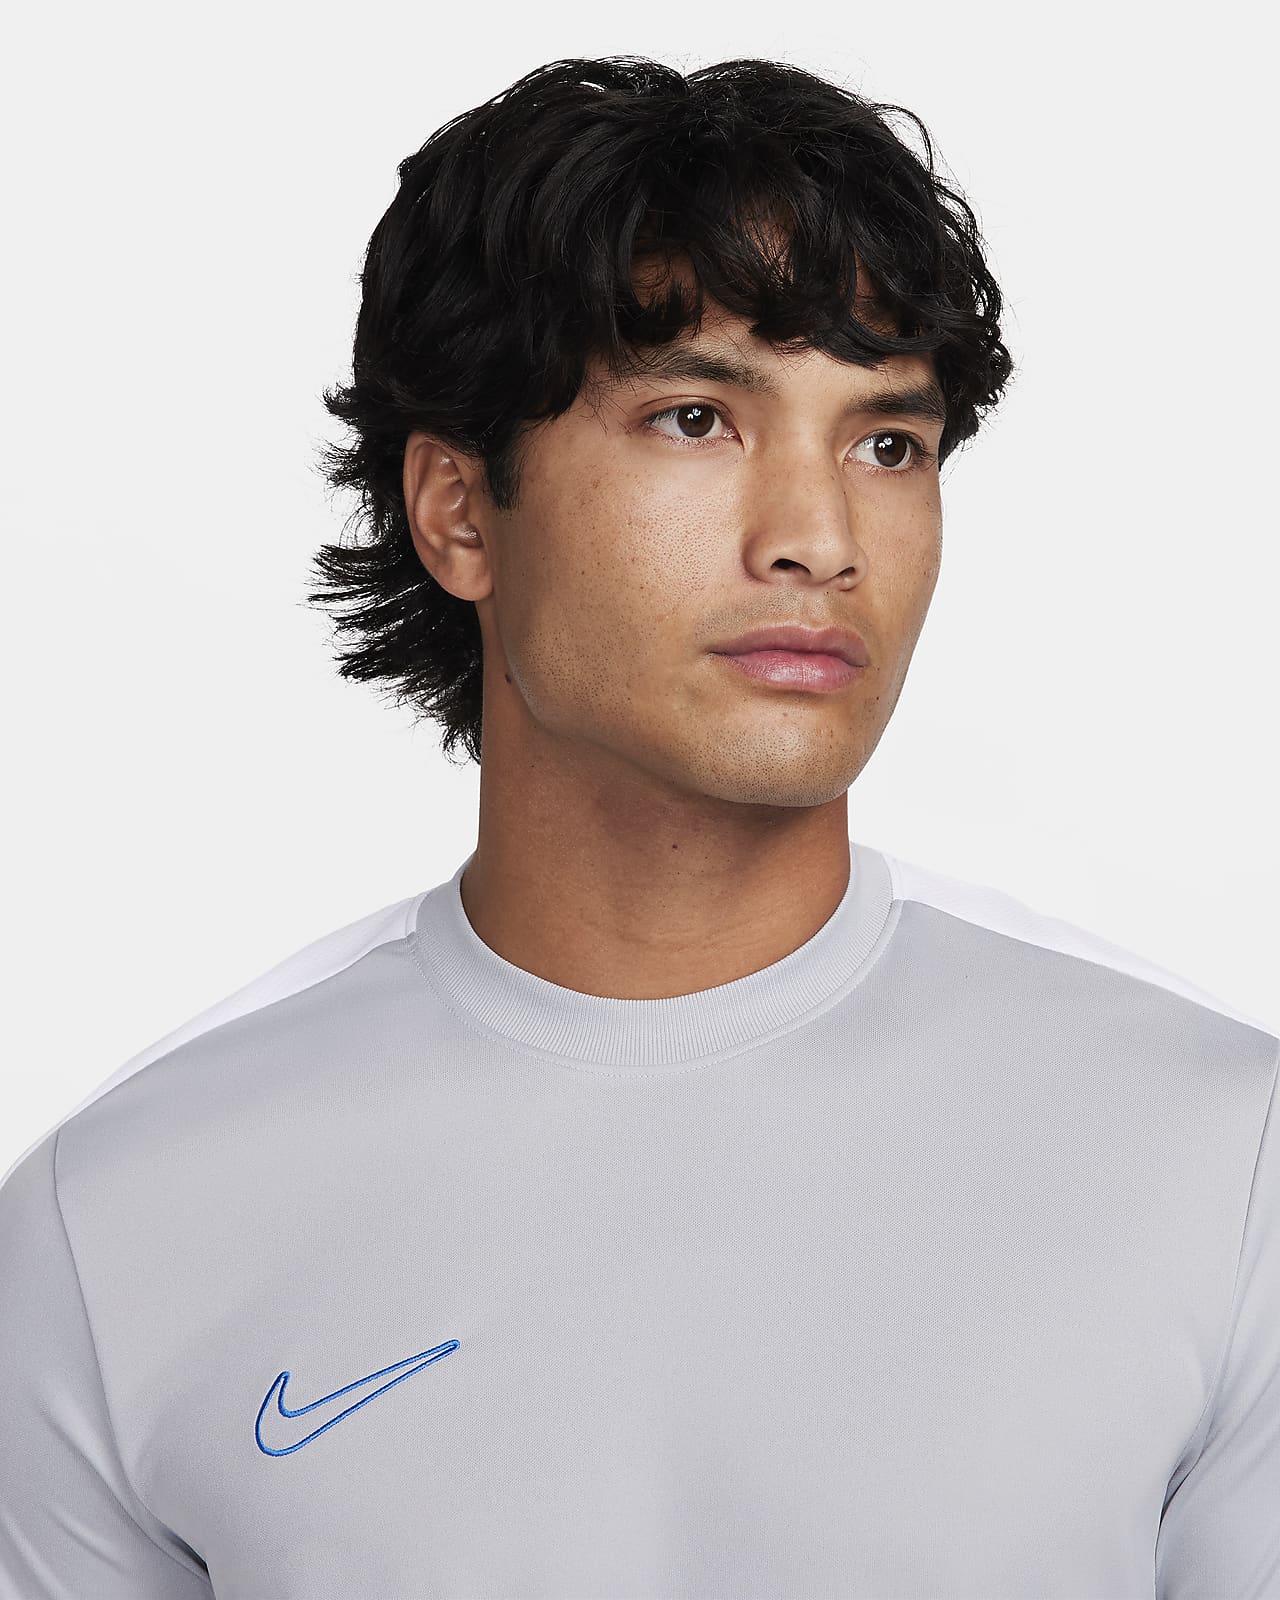 Maillot de foot Nike Academy 23 homme - Blanc - DV9750-100